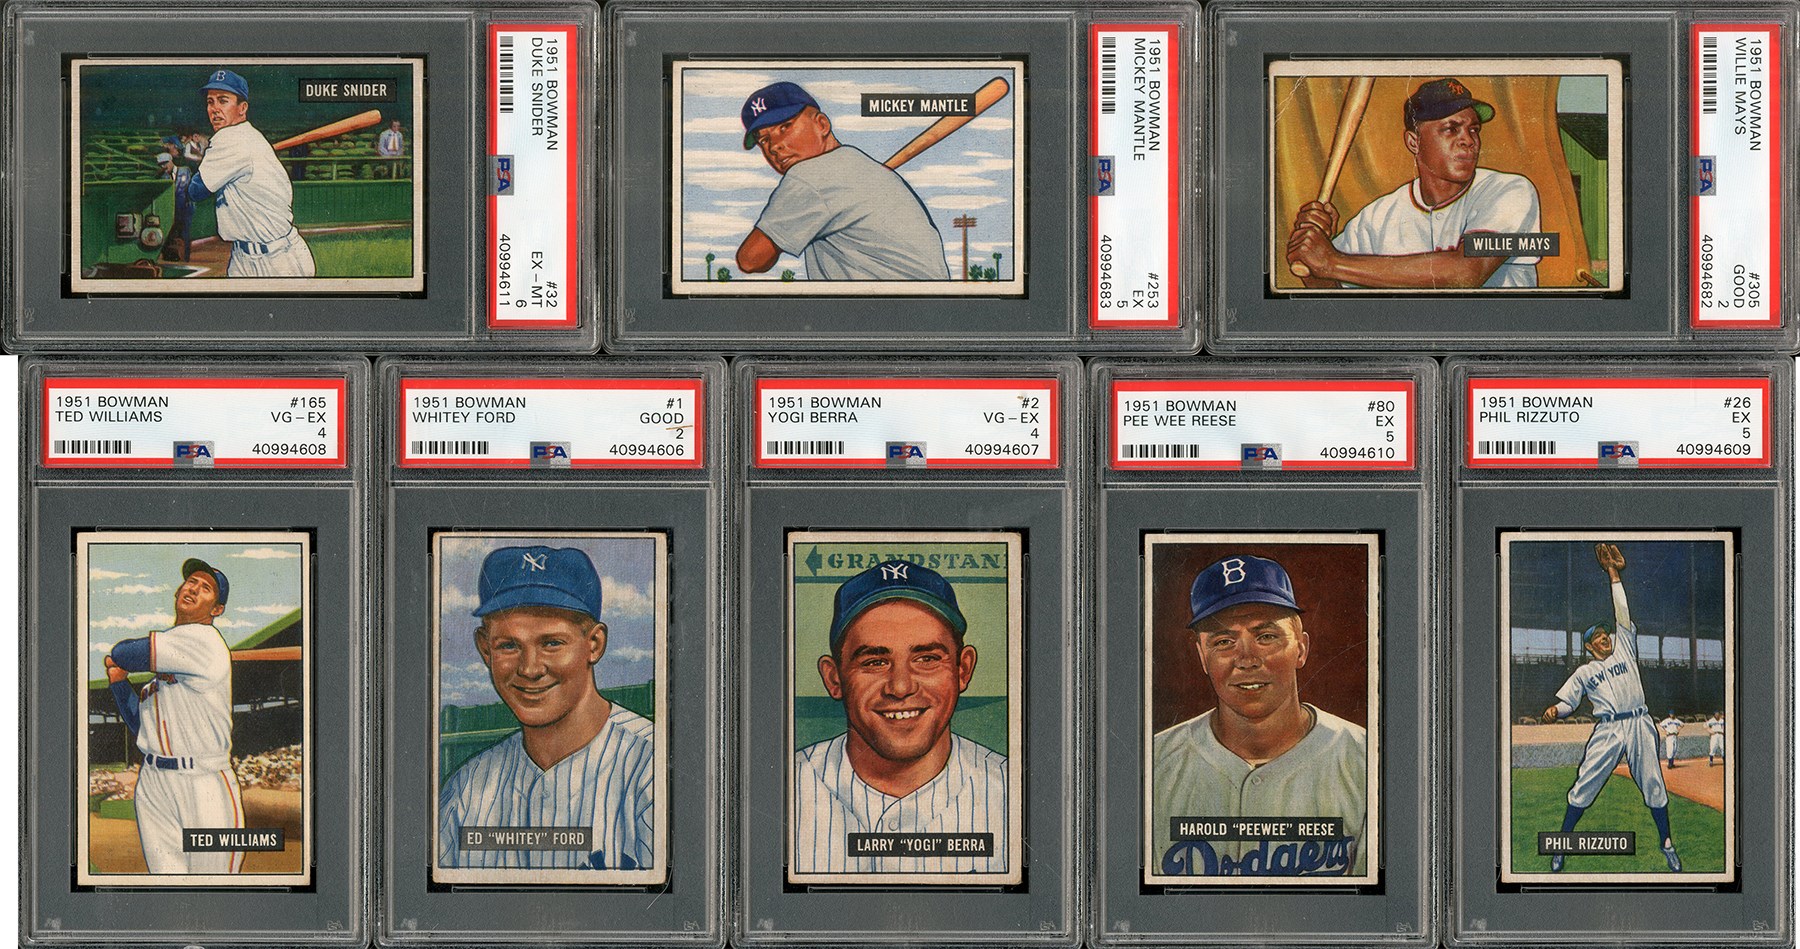 Baseball and Trading Cards - 1951 Bowman Baseball Complete Set